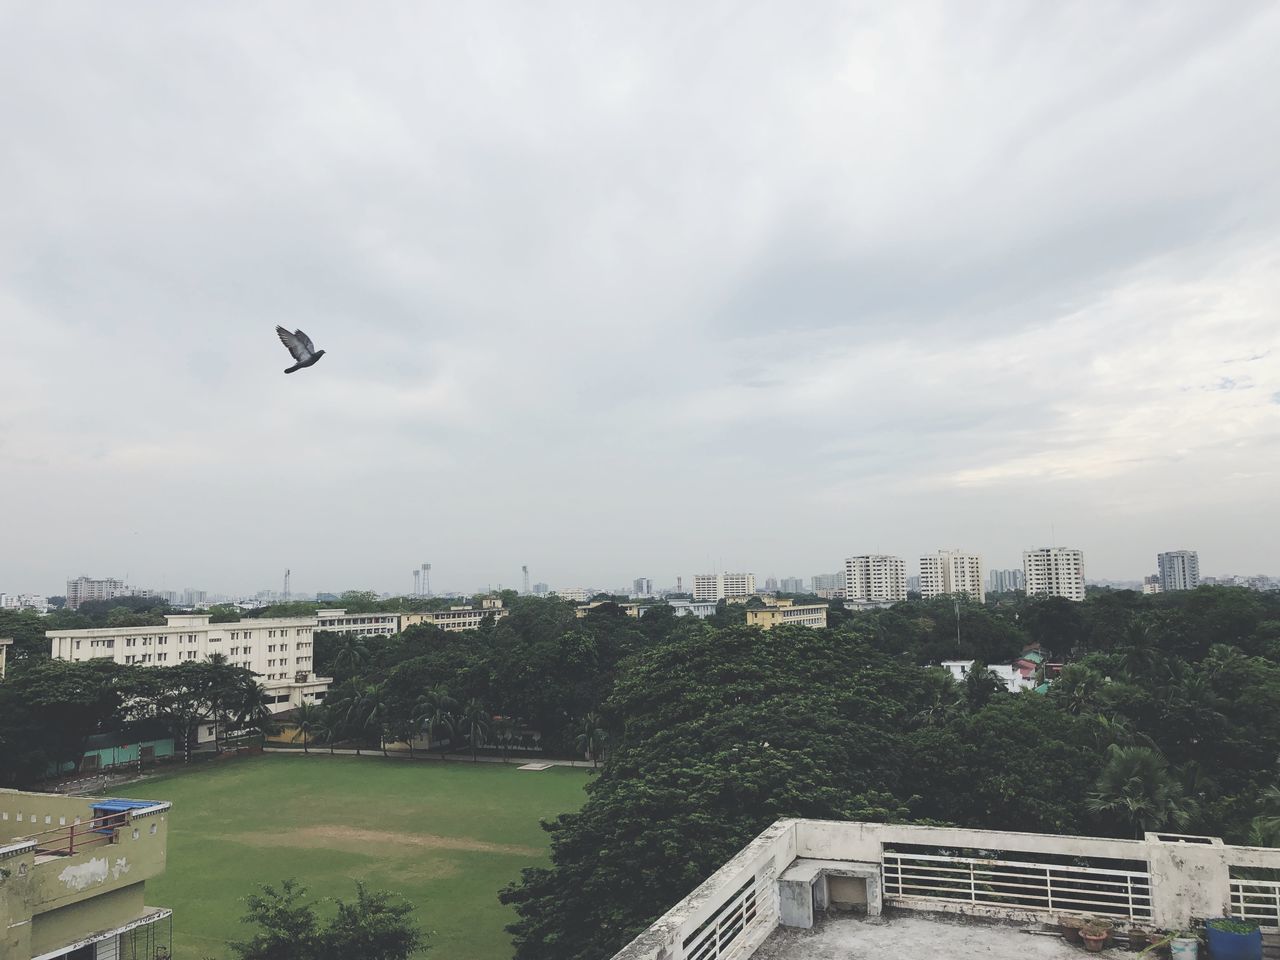 BIRD FLYING OVER BUILDINGS AGAINST SKY